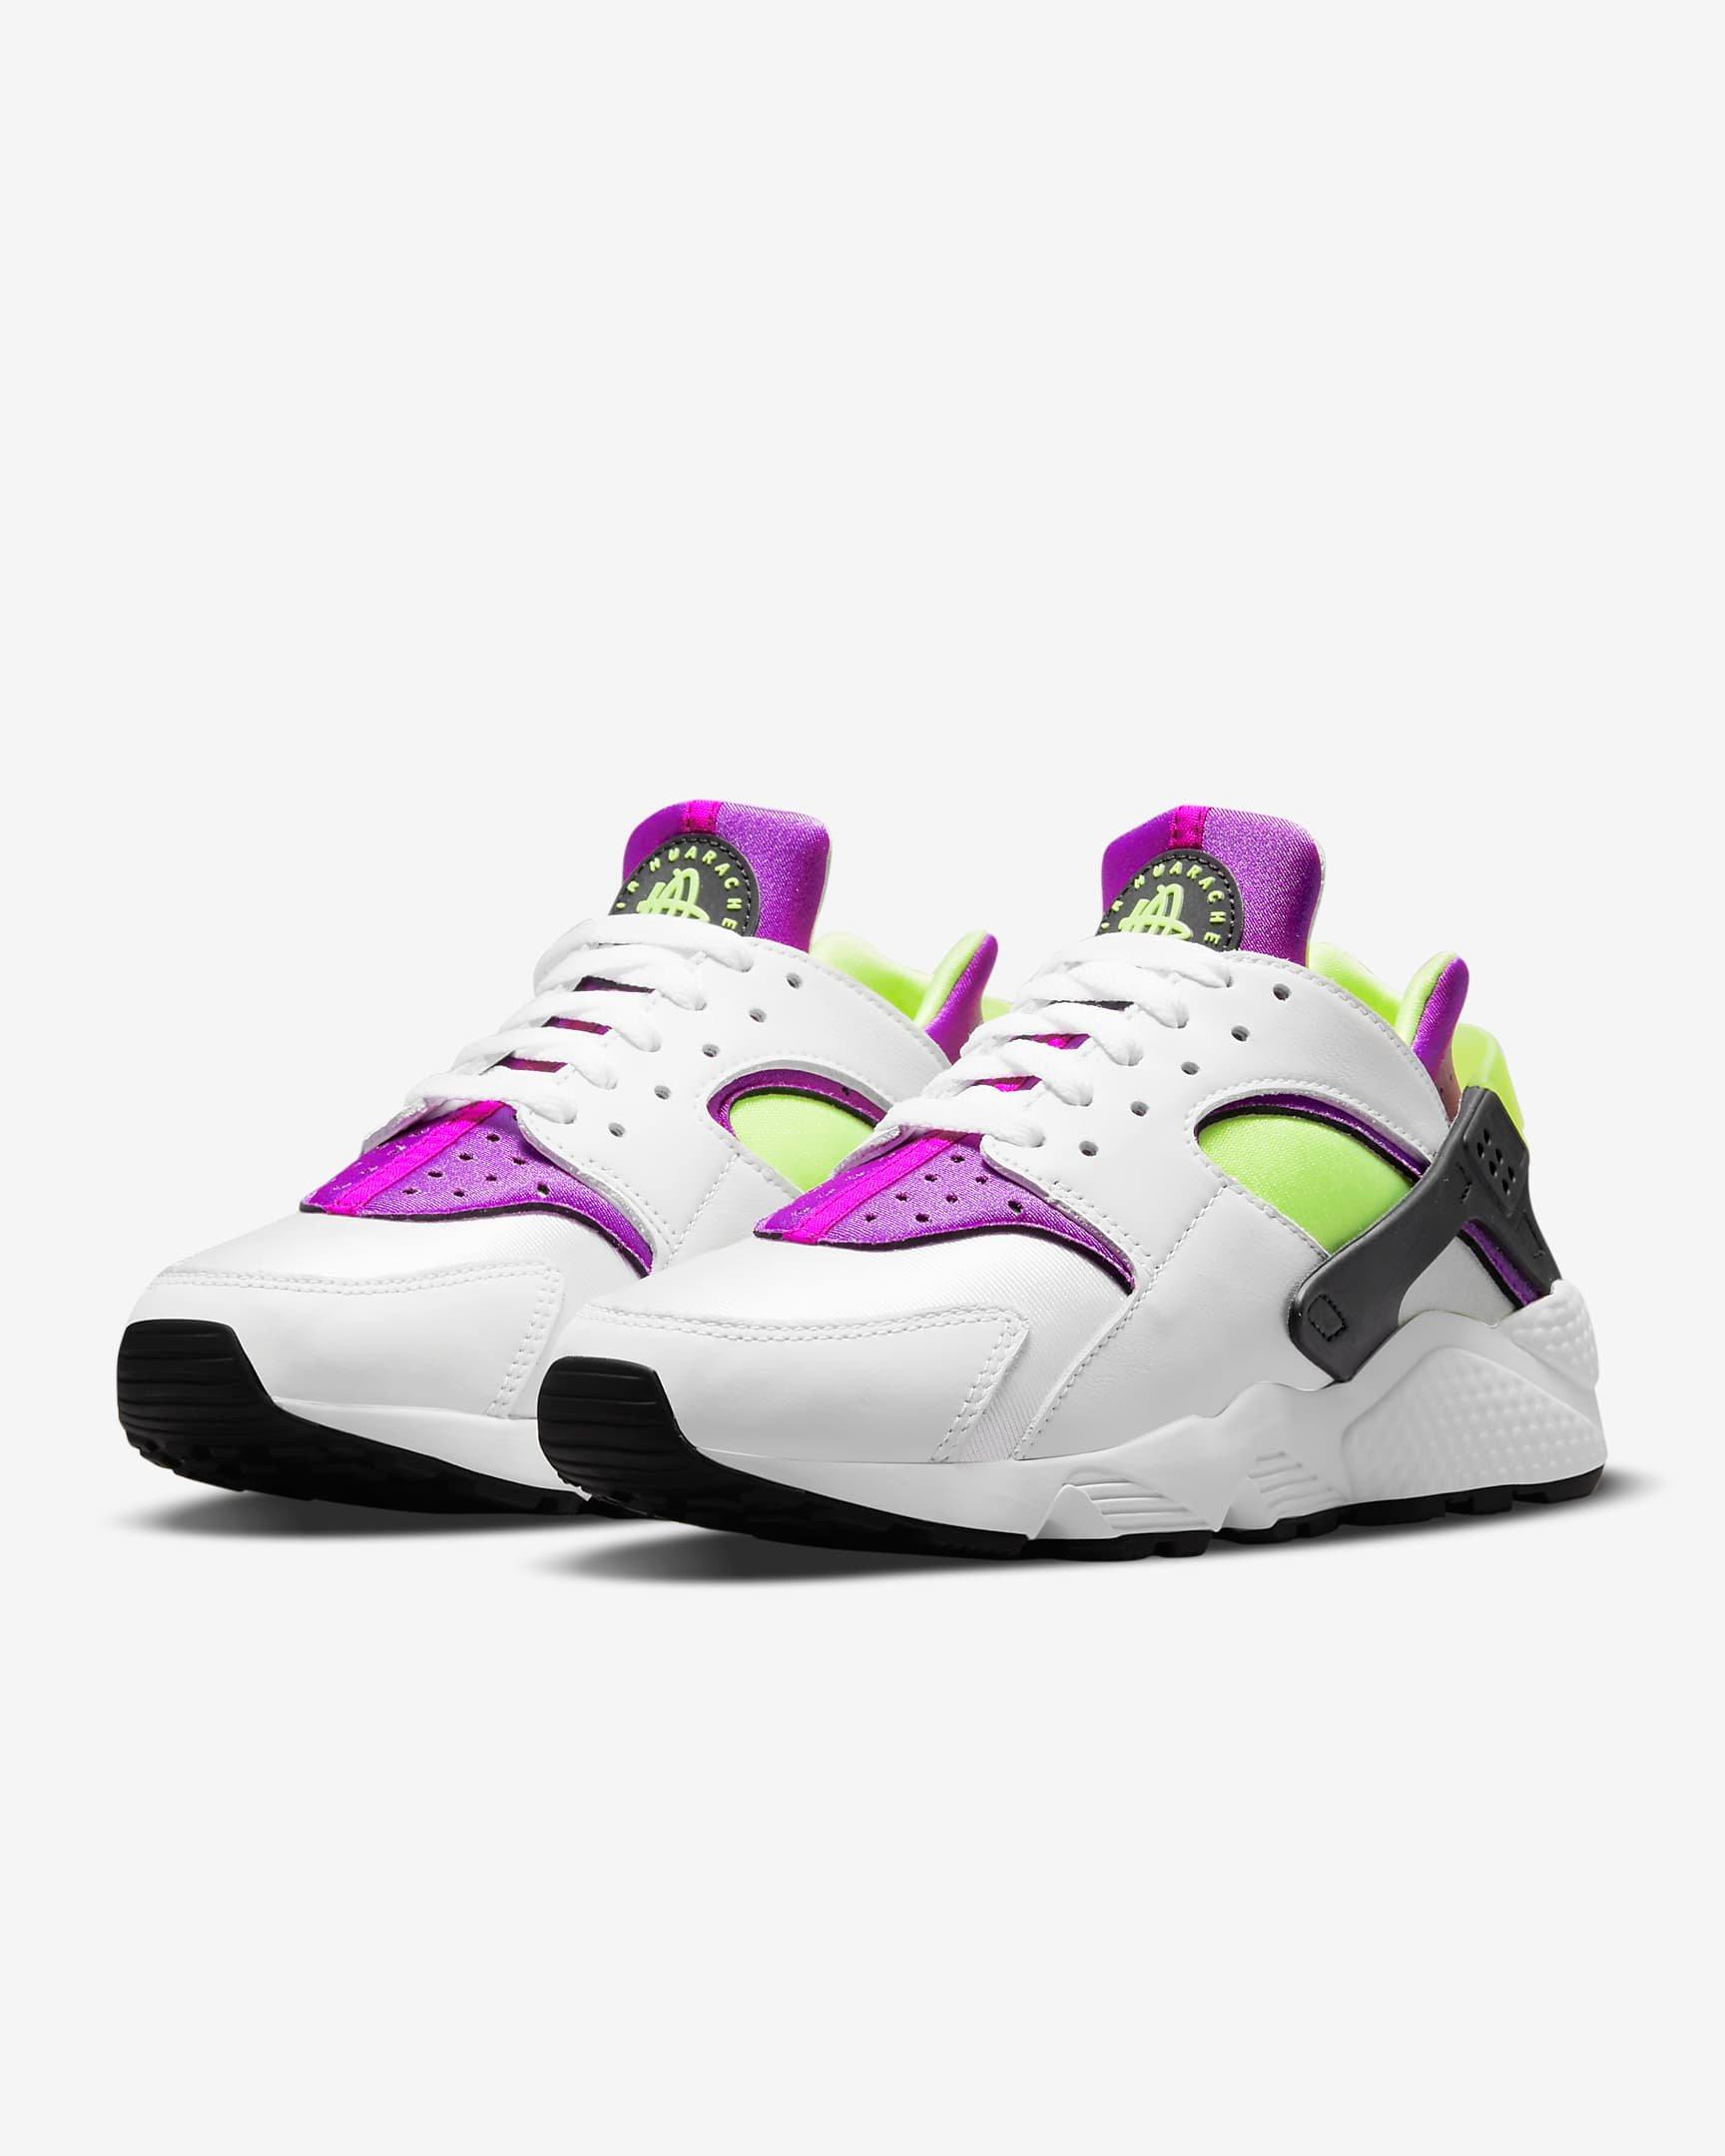 Nike Huarache "White/Neon Yellow/Magenta/Black" Men's Shoe